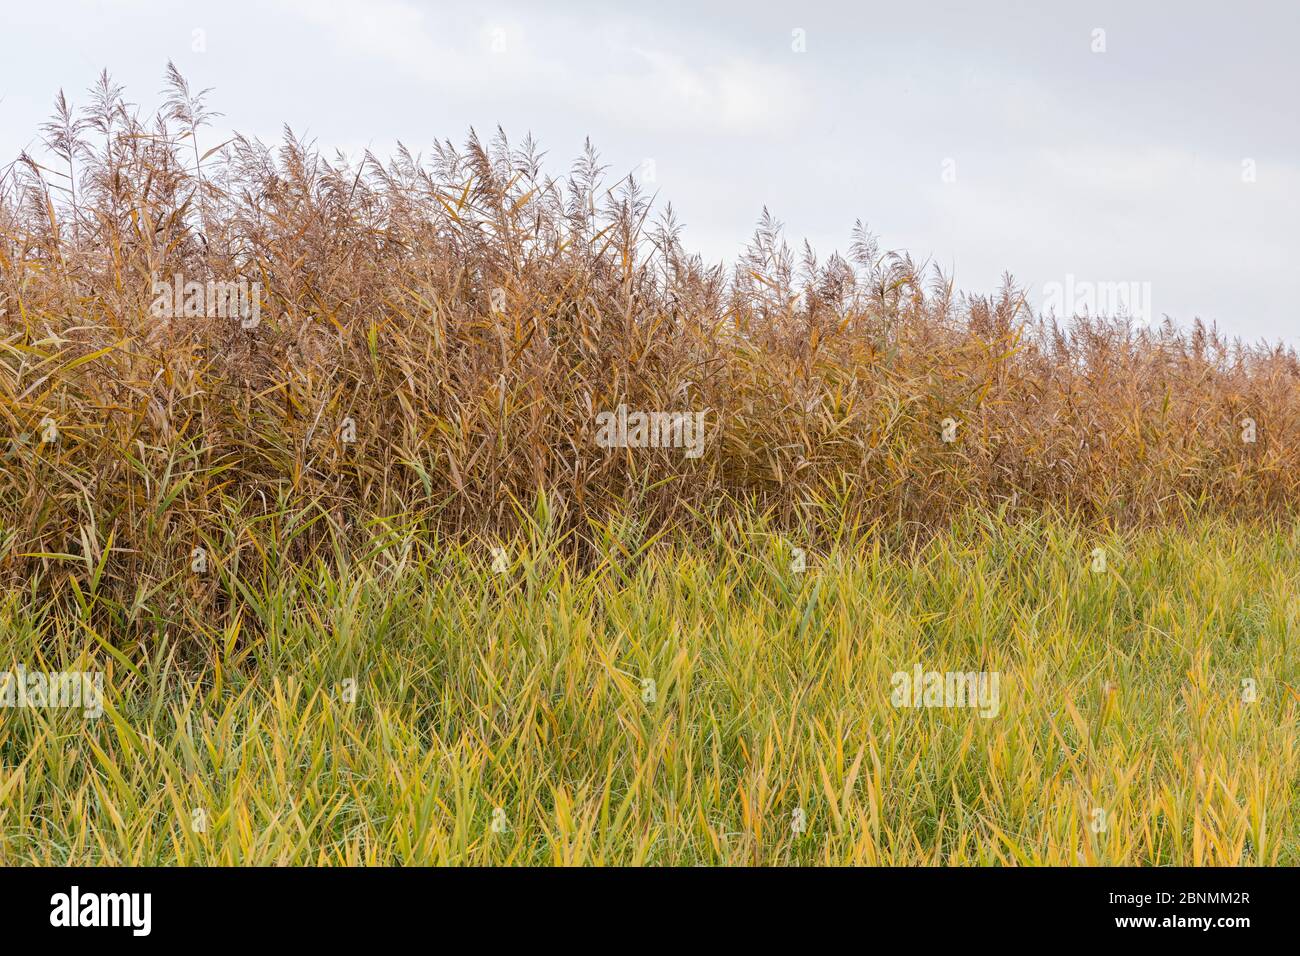 Common Reed (Phragmites australis) in autumn colour, Germany Stock Photo